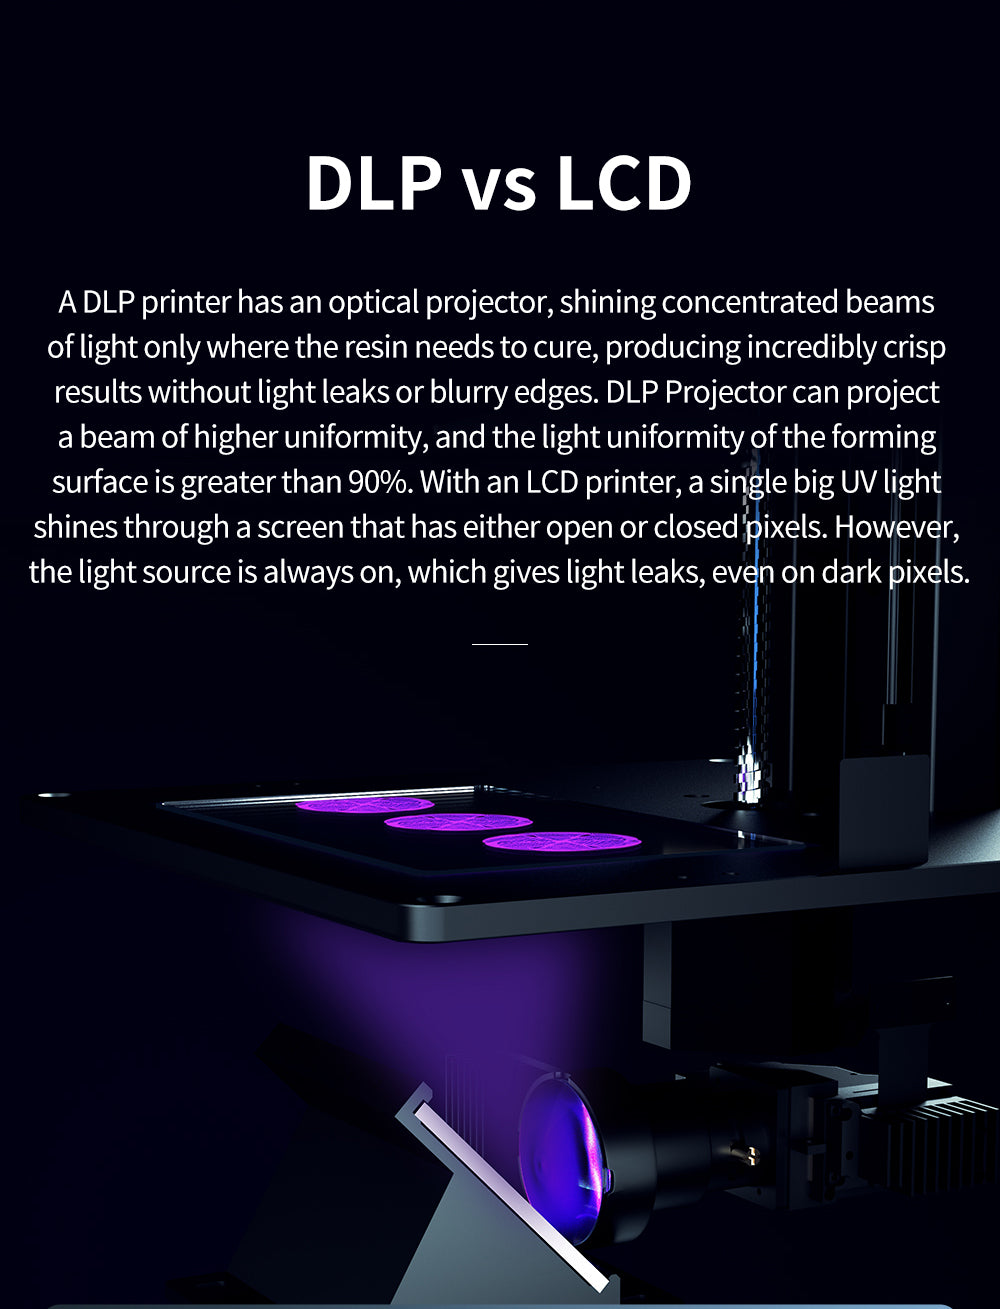 ANYCUBIC Ultra DLP 3d Printer